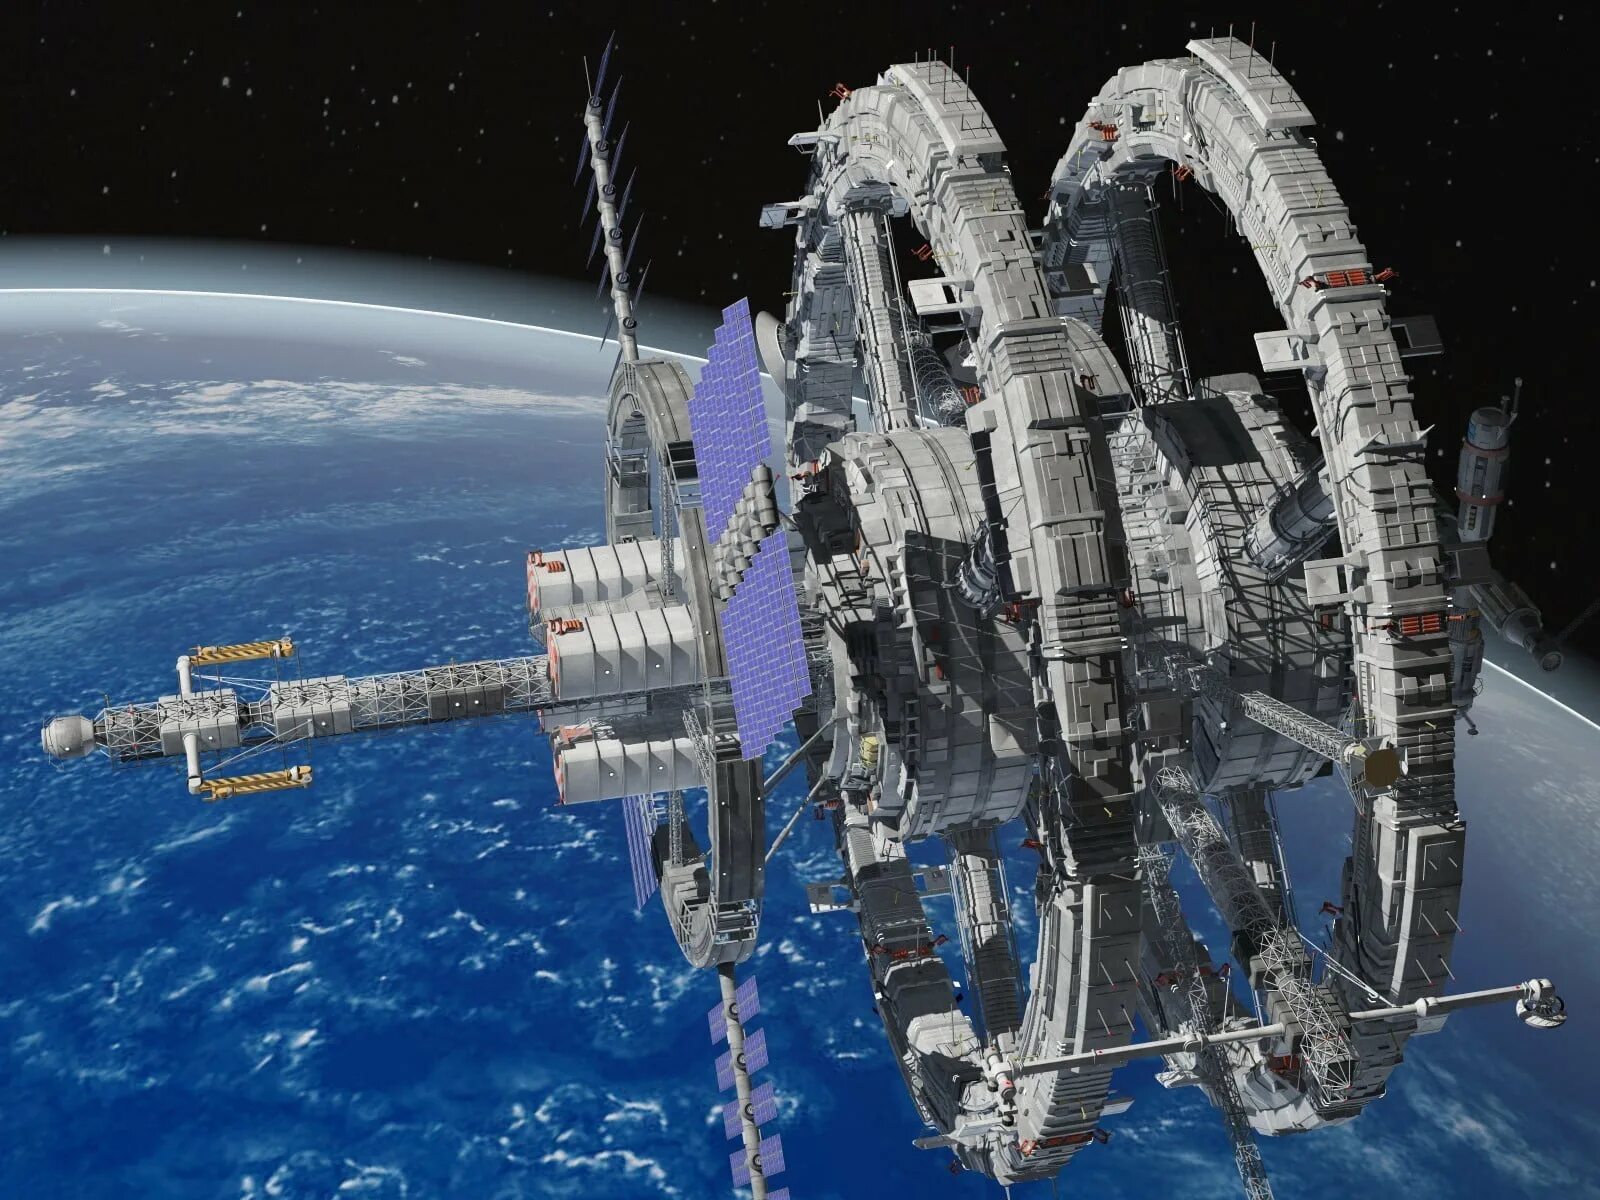 Sci-Fi Космическая станция 3d. Орбитальная Космическая станция. Космические корабли и орбитальные станции. Космические станции будущего.